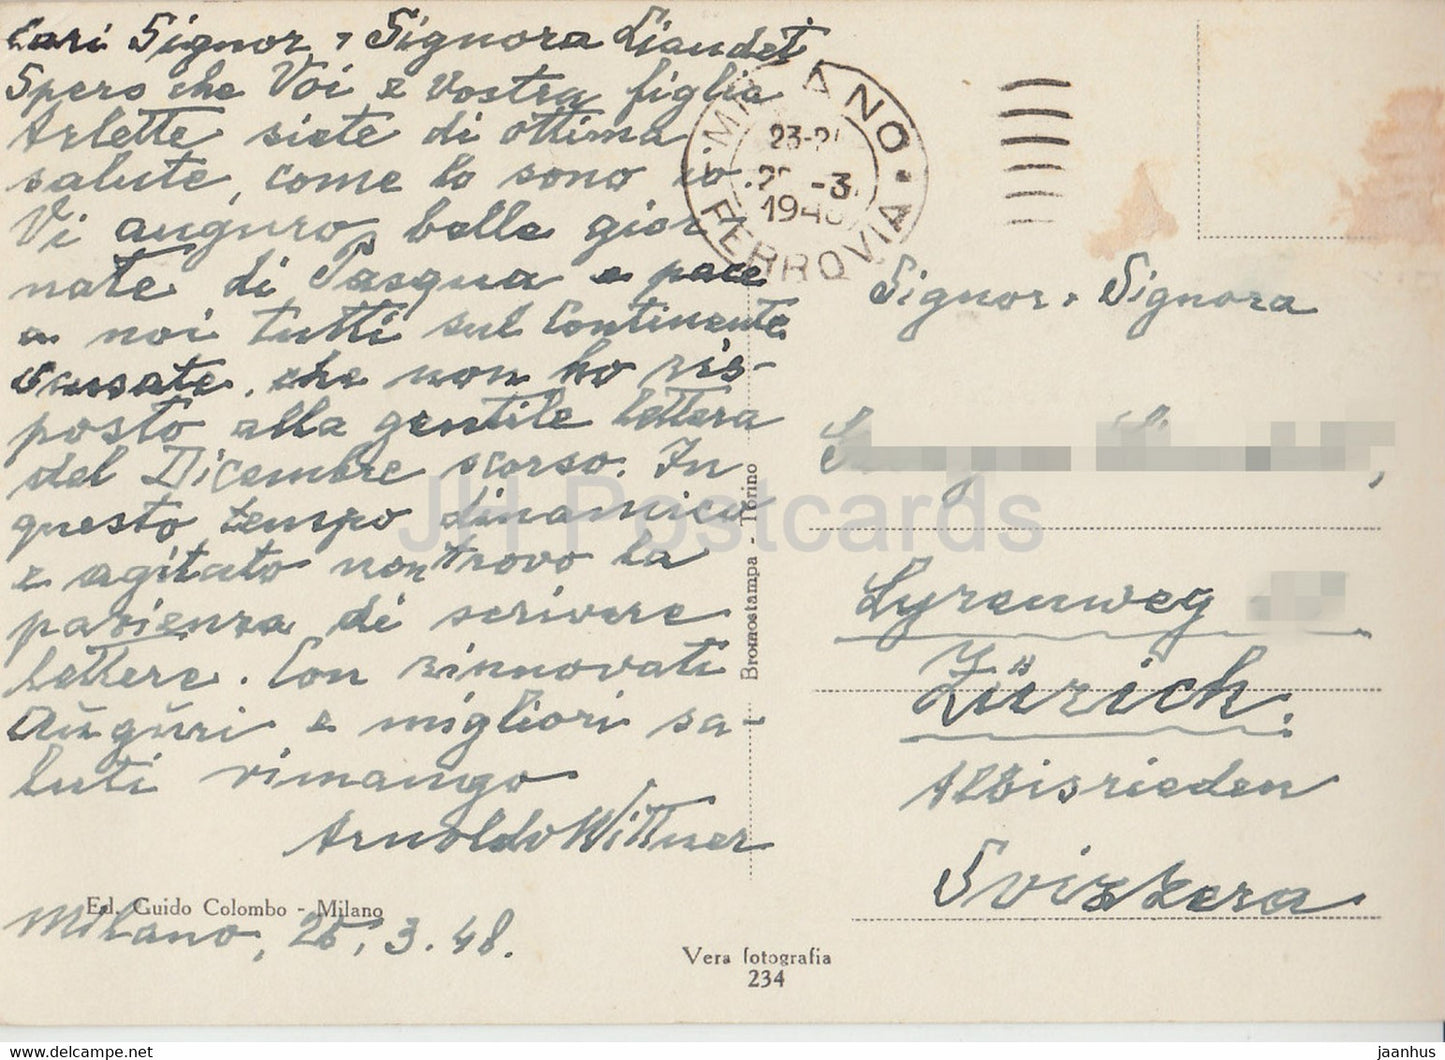 Milan - Milan - Castello Sforzesco - château - carte postale ancienne - 1948 - Italie - utilisé